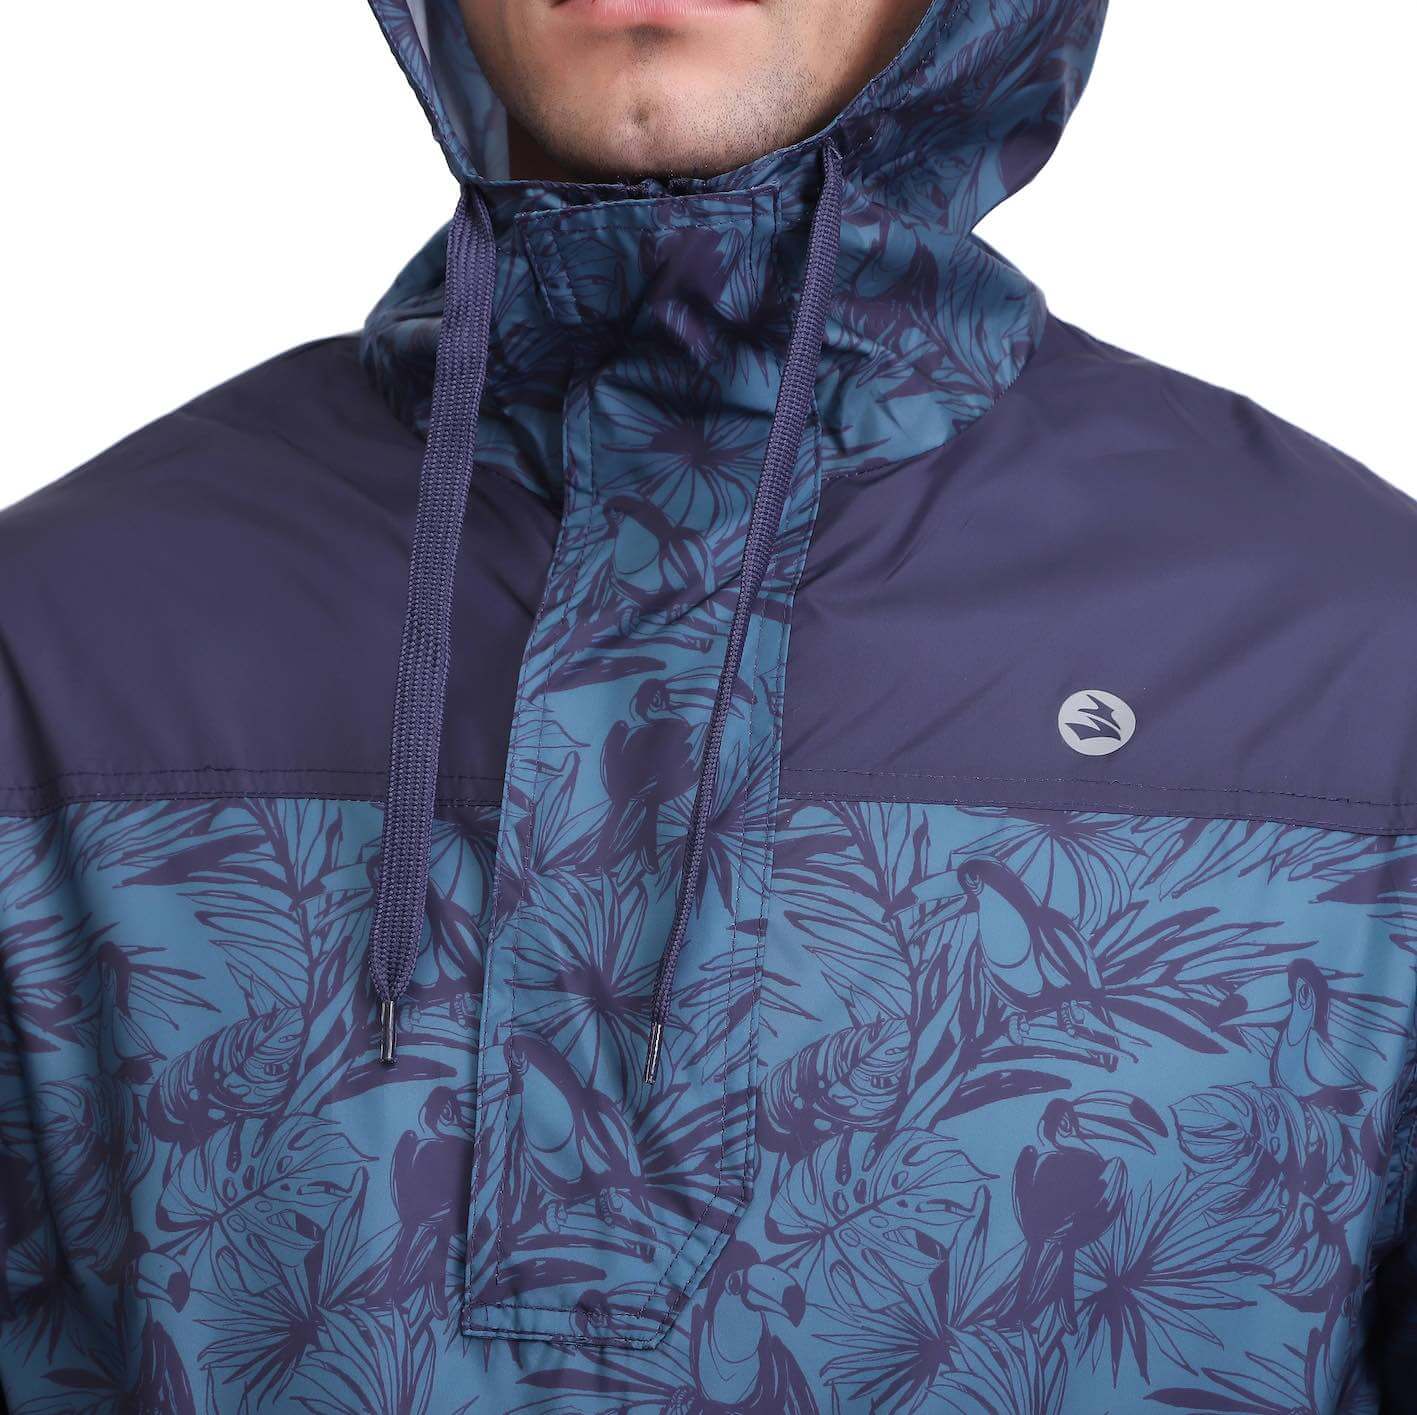 Men's Stylish Waterproof Pullover Camouflage Print Wind Jackets